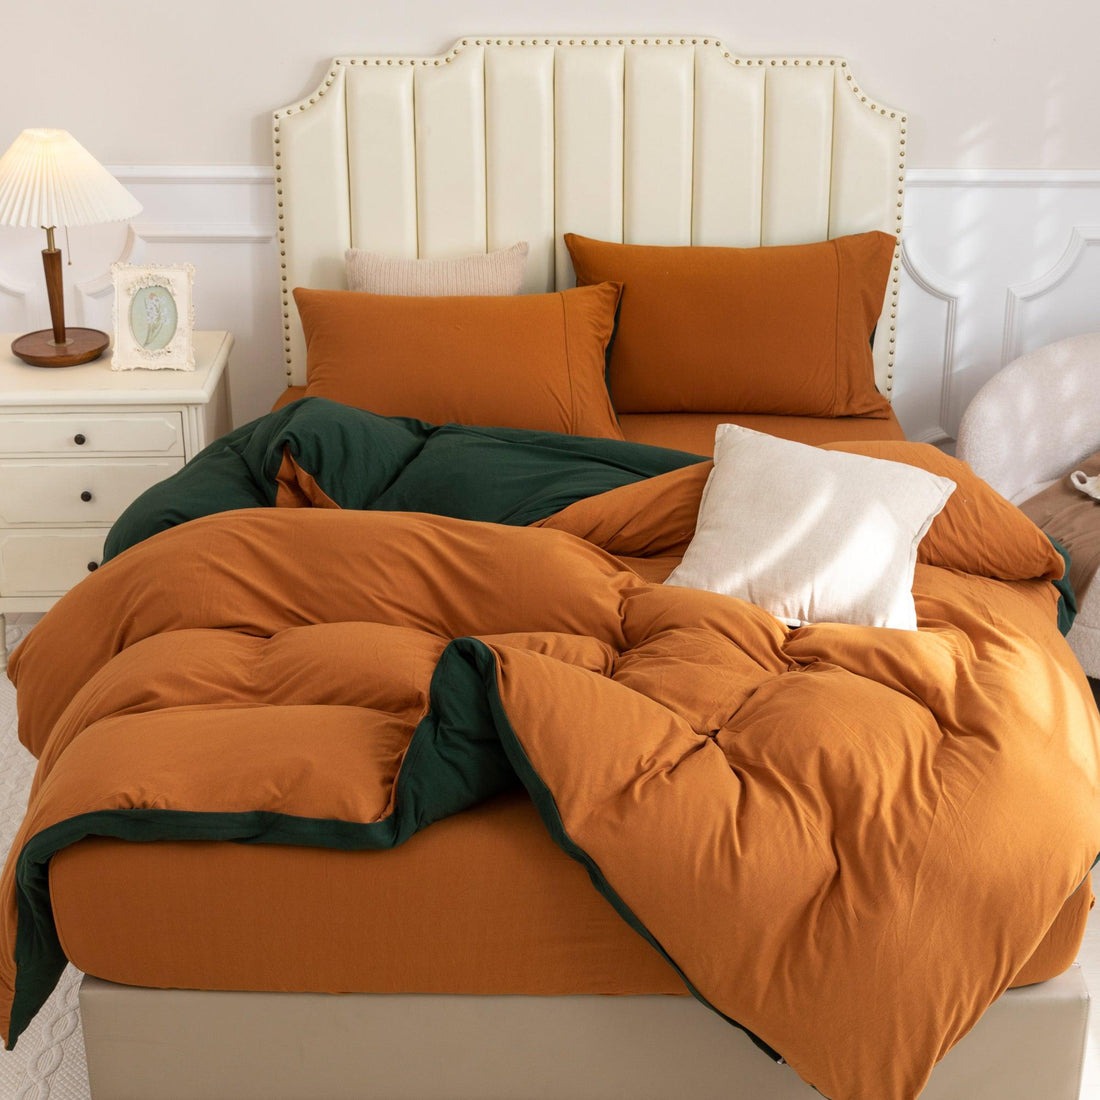 Pure Era - Jersey Duvet Cover Set - Reversible Solid Forest Green& Burnt Orange